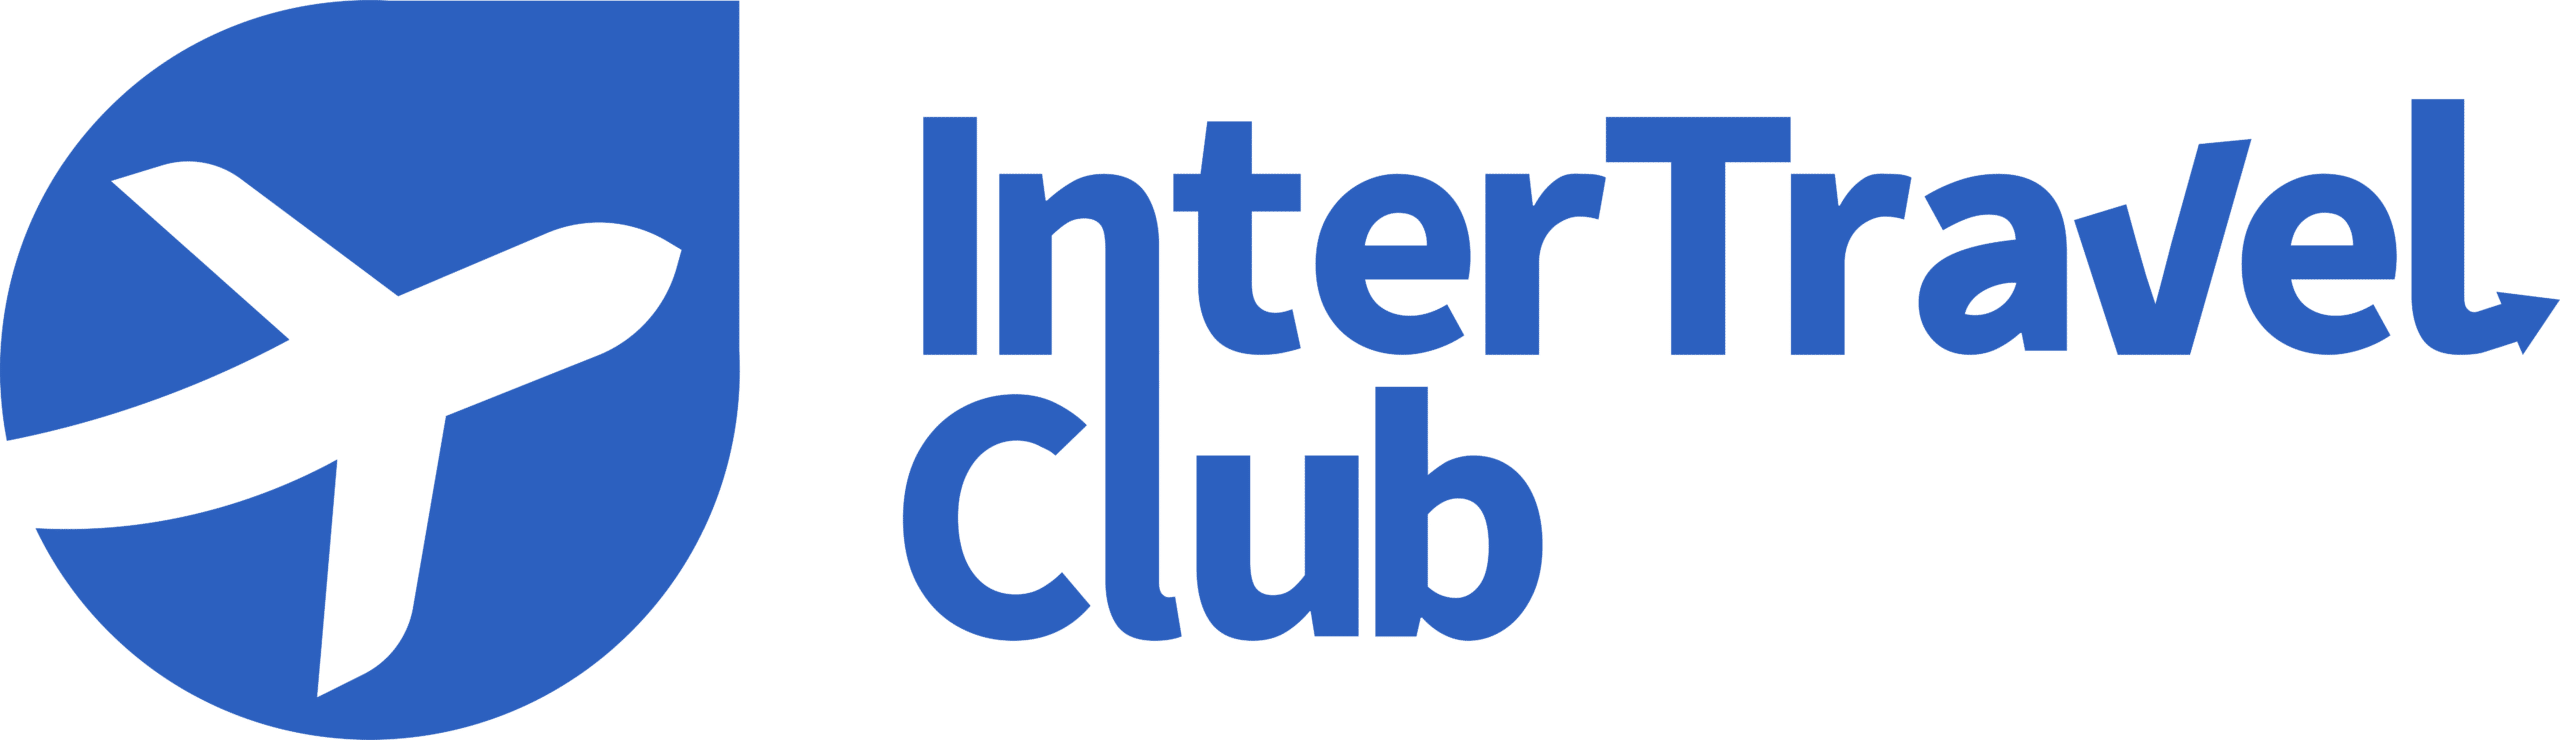 inter travel club